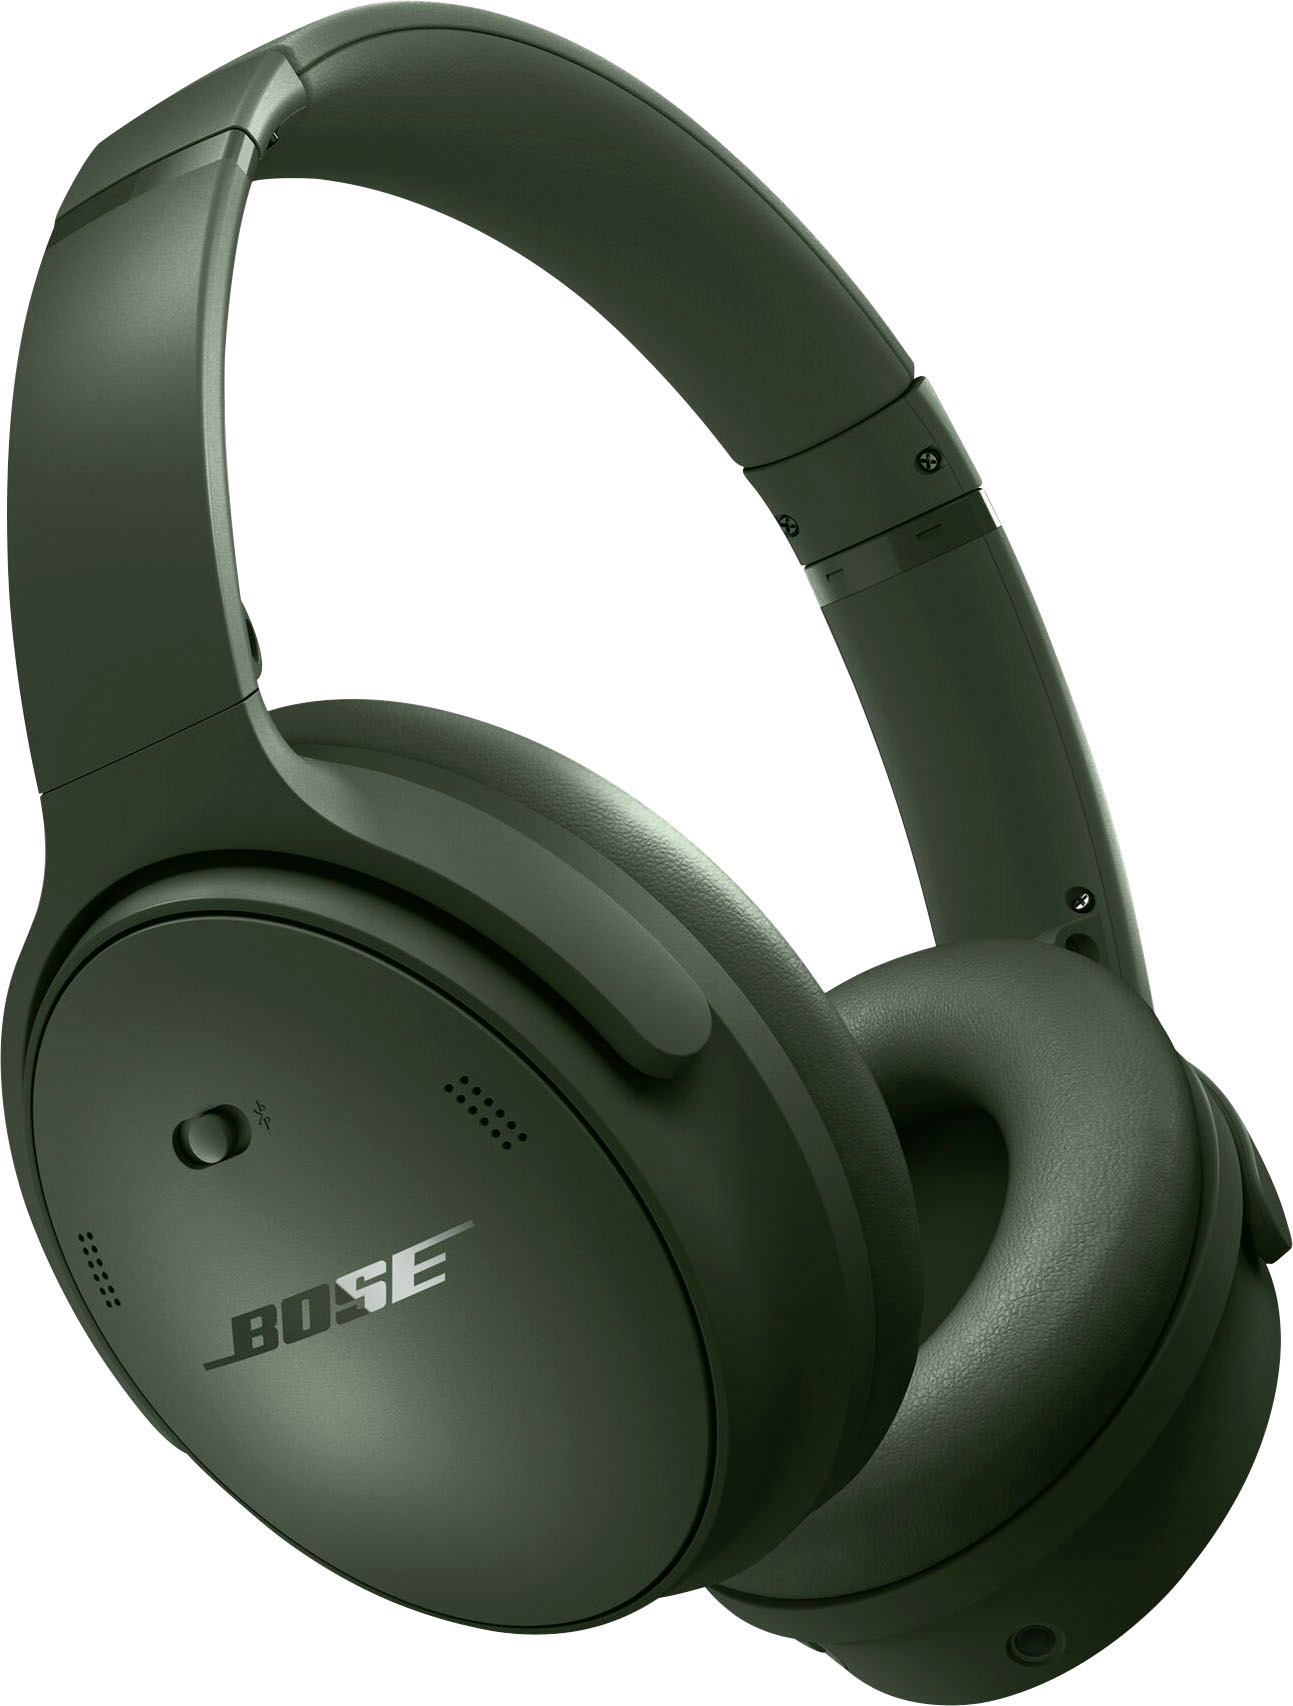 Bose headphones - イヤホン